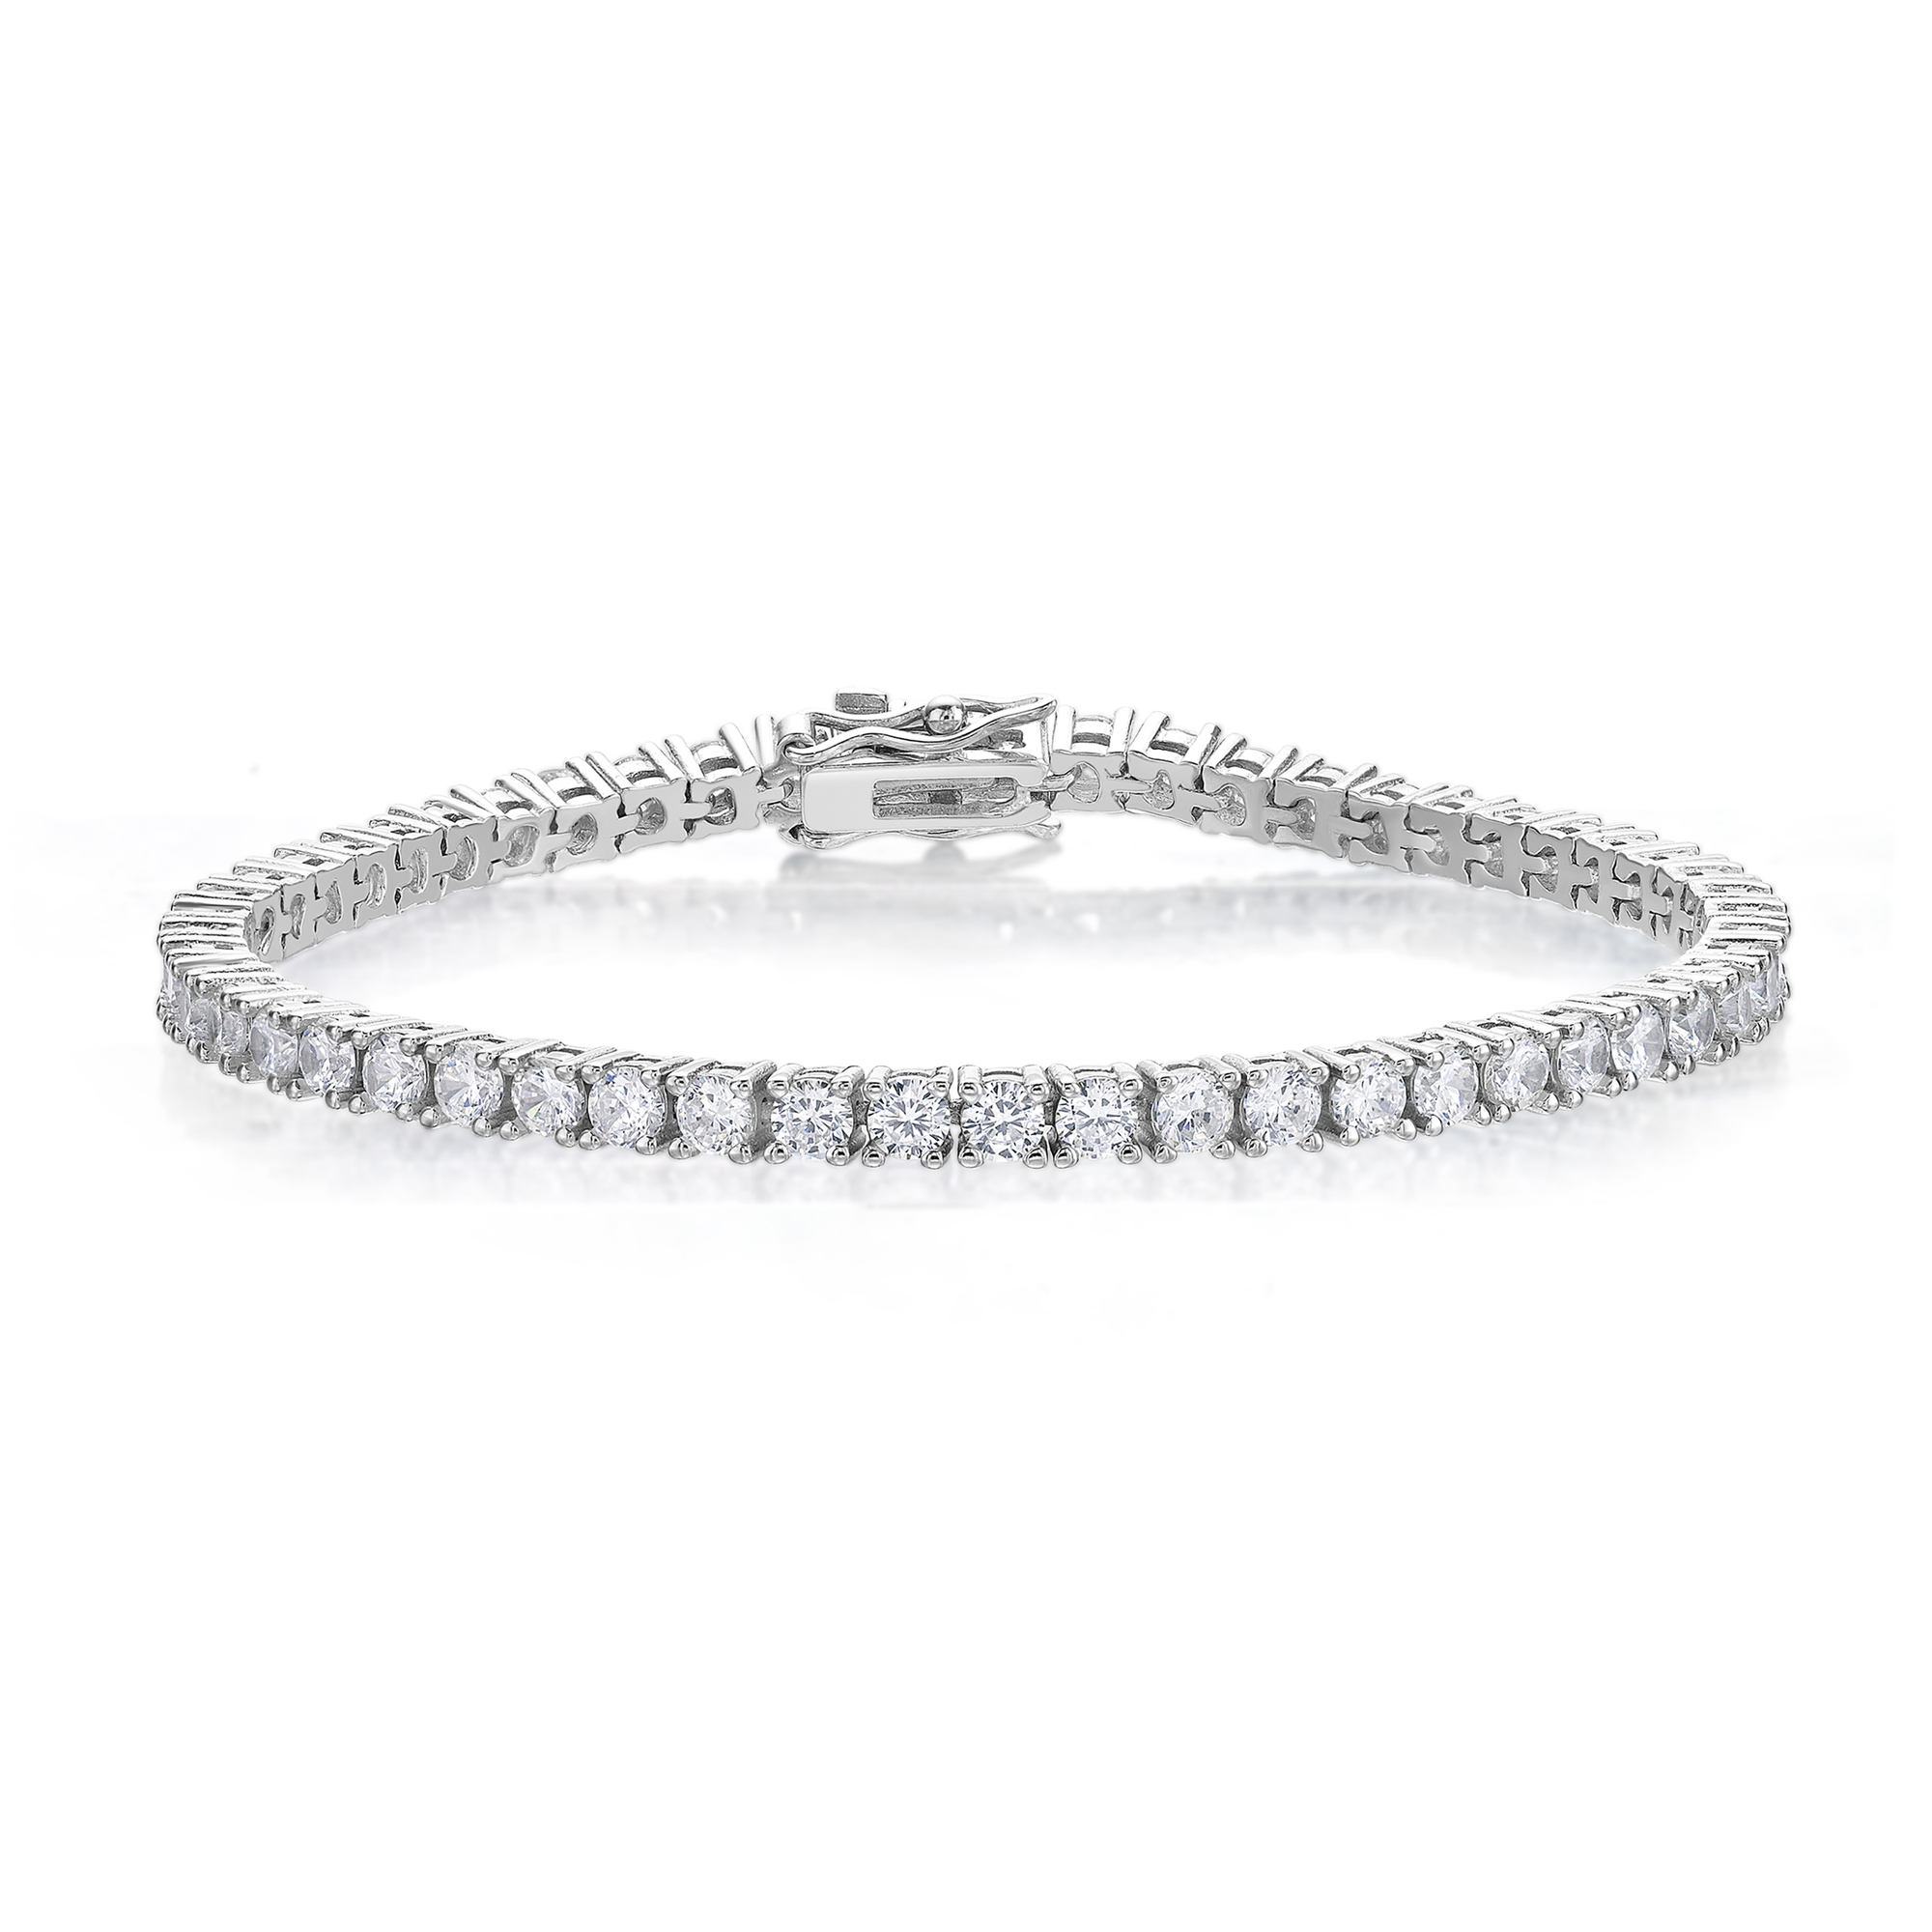 44693-bracelet-fashion-jewelry-sterling-silver-cubic-zirconia-round-1mm-44693.jpg